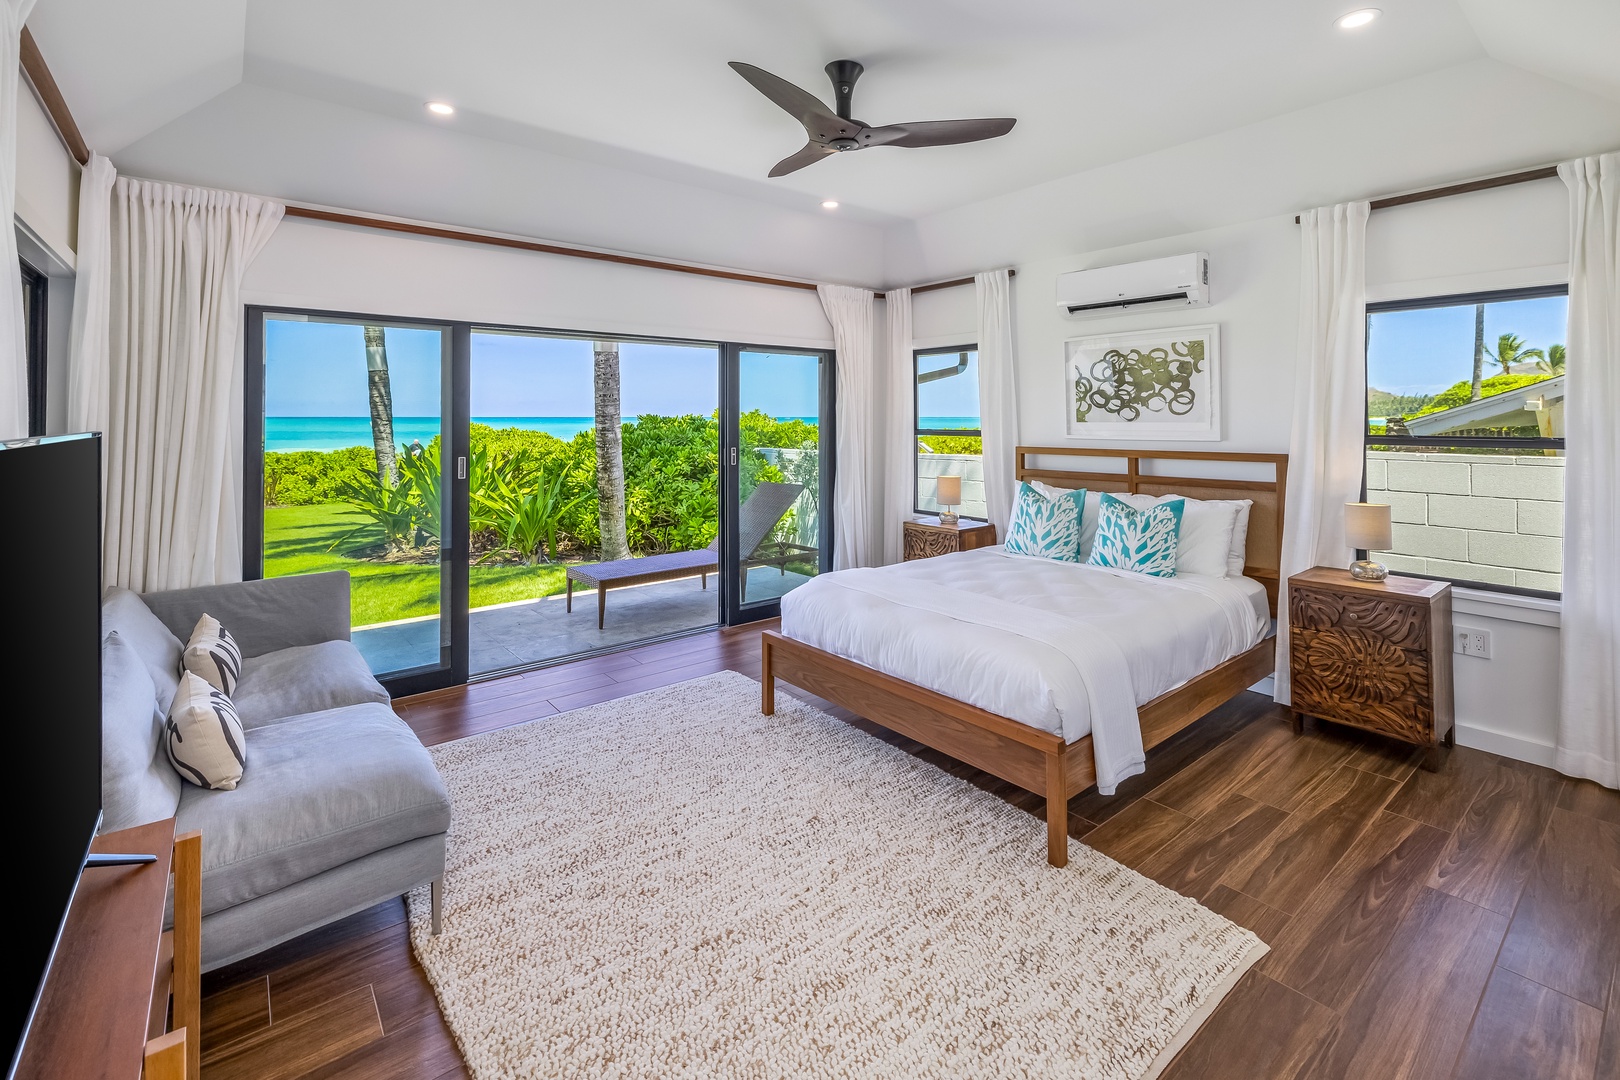 Kailua Vacation Rentals, Kailua Beach Villa - Third suite: Makai South with a queen bed, ocean view, split AC, and ceiling fan